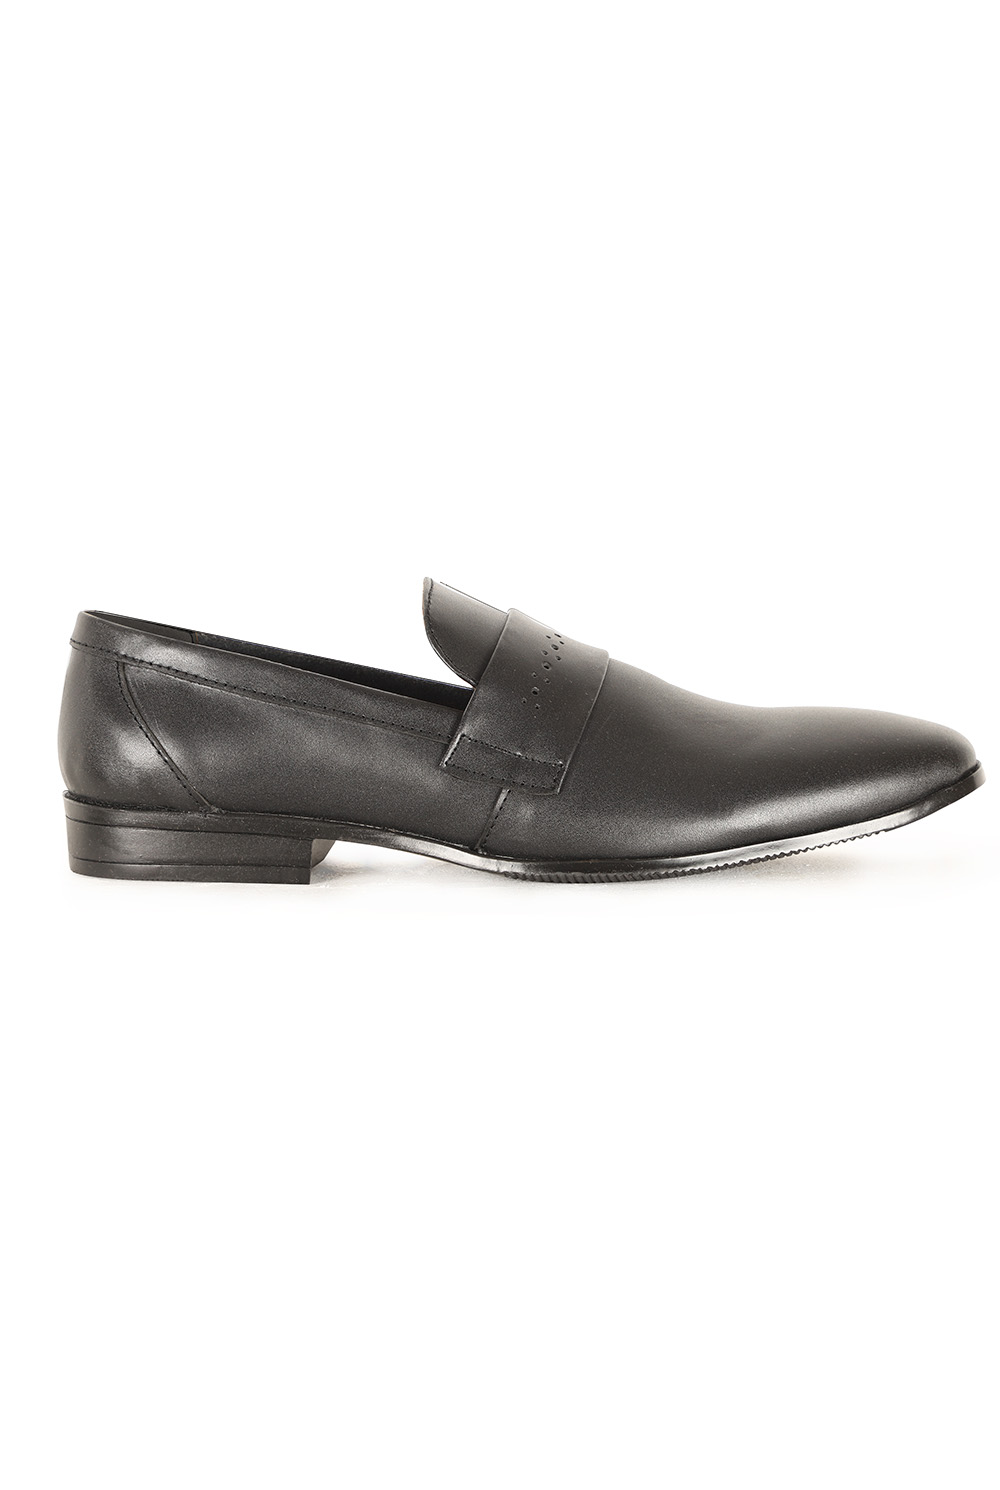 Mens Formal Leather Shoe – Thilakawardhana